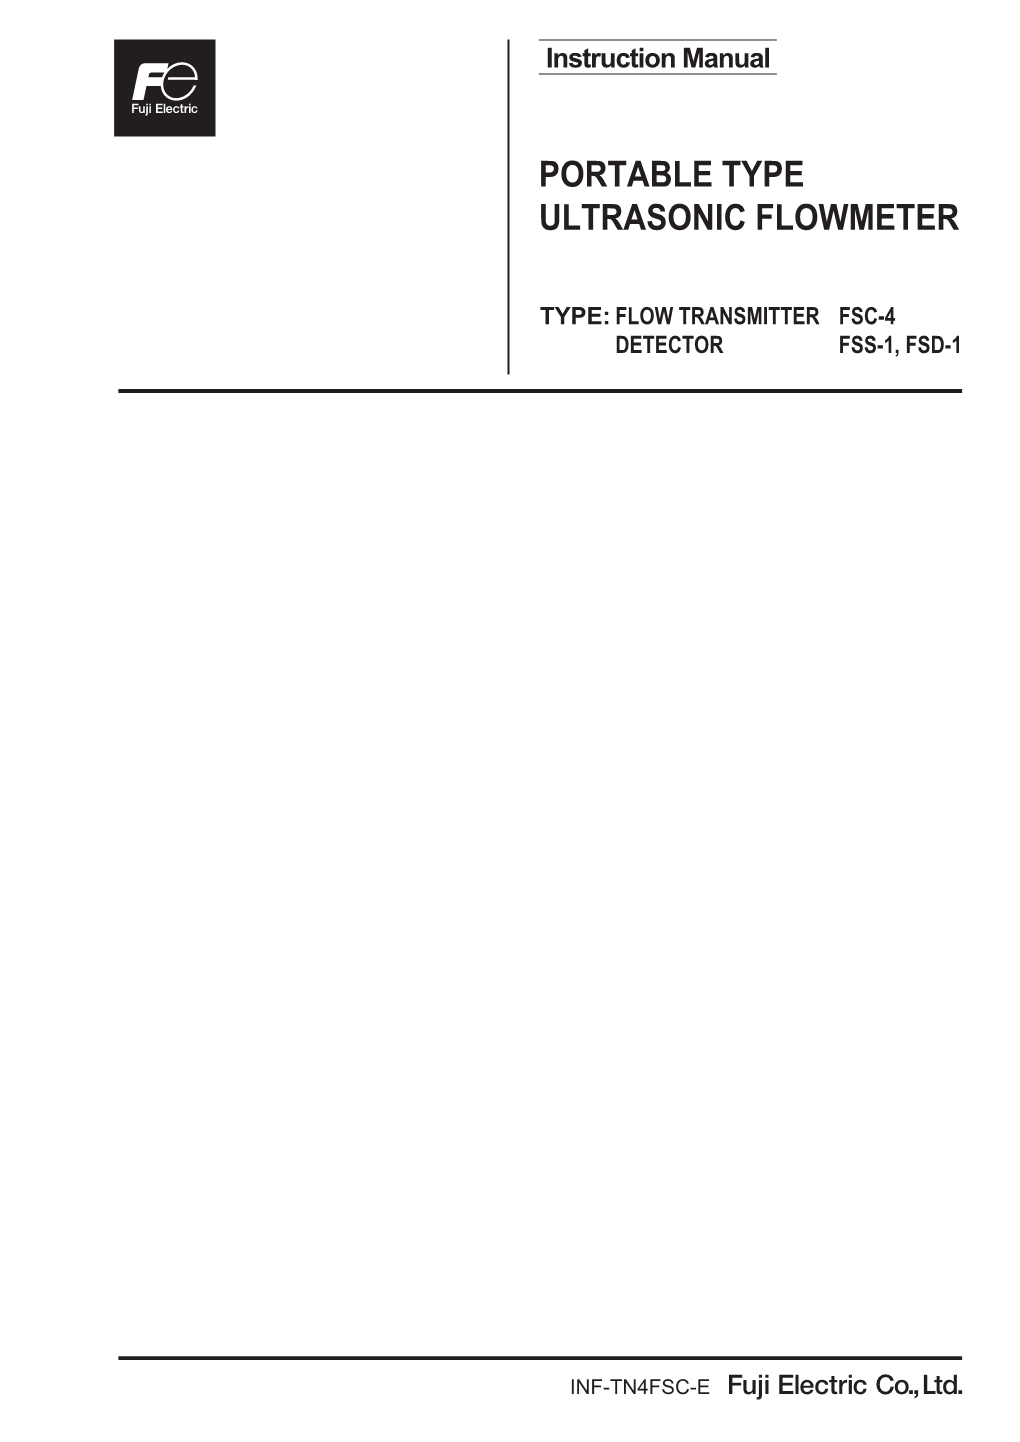 Fuji Electric Portaflow-C FSC-4 Ultrasonic Flow Meter Manual